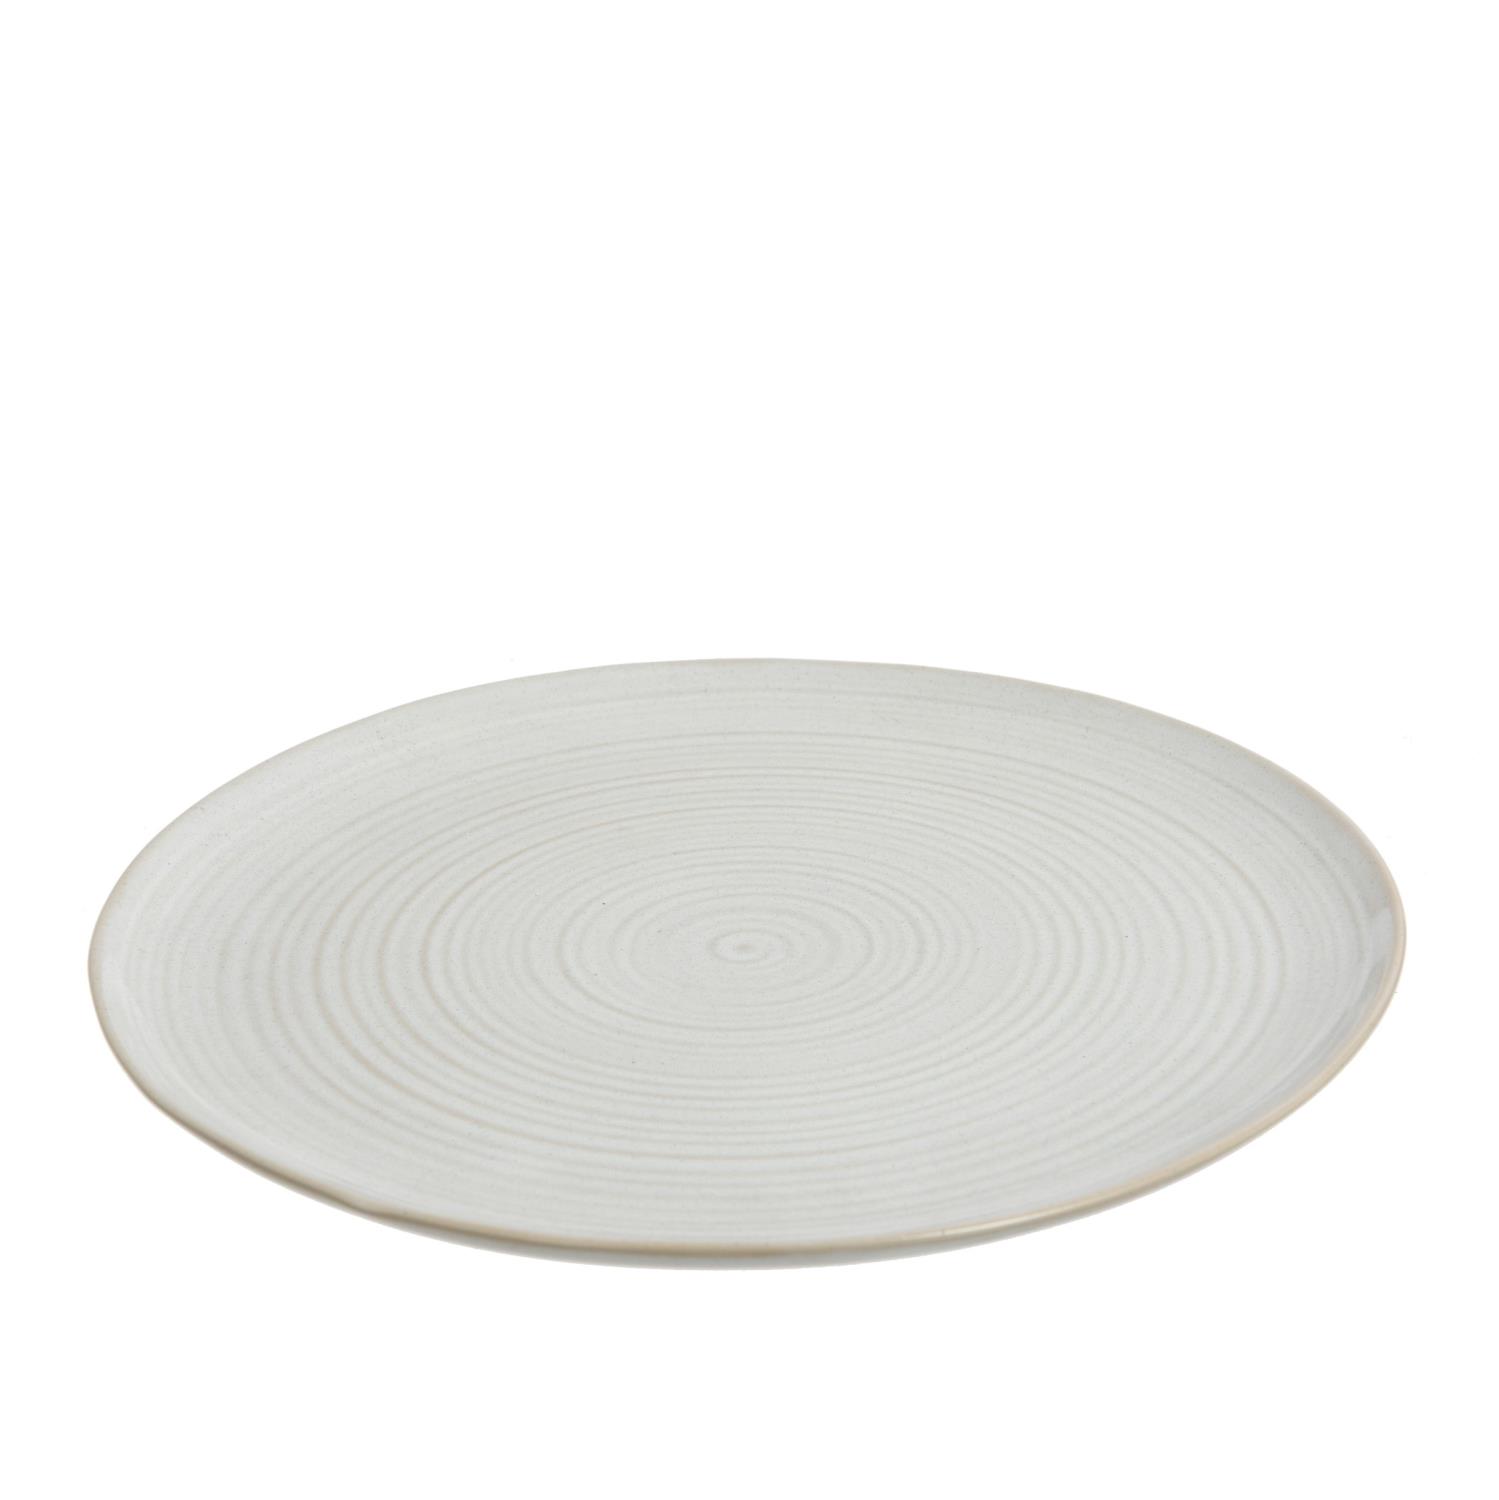 Plate Noa Porcelain White 27,5cm 98319